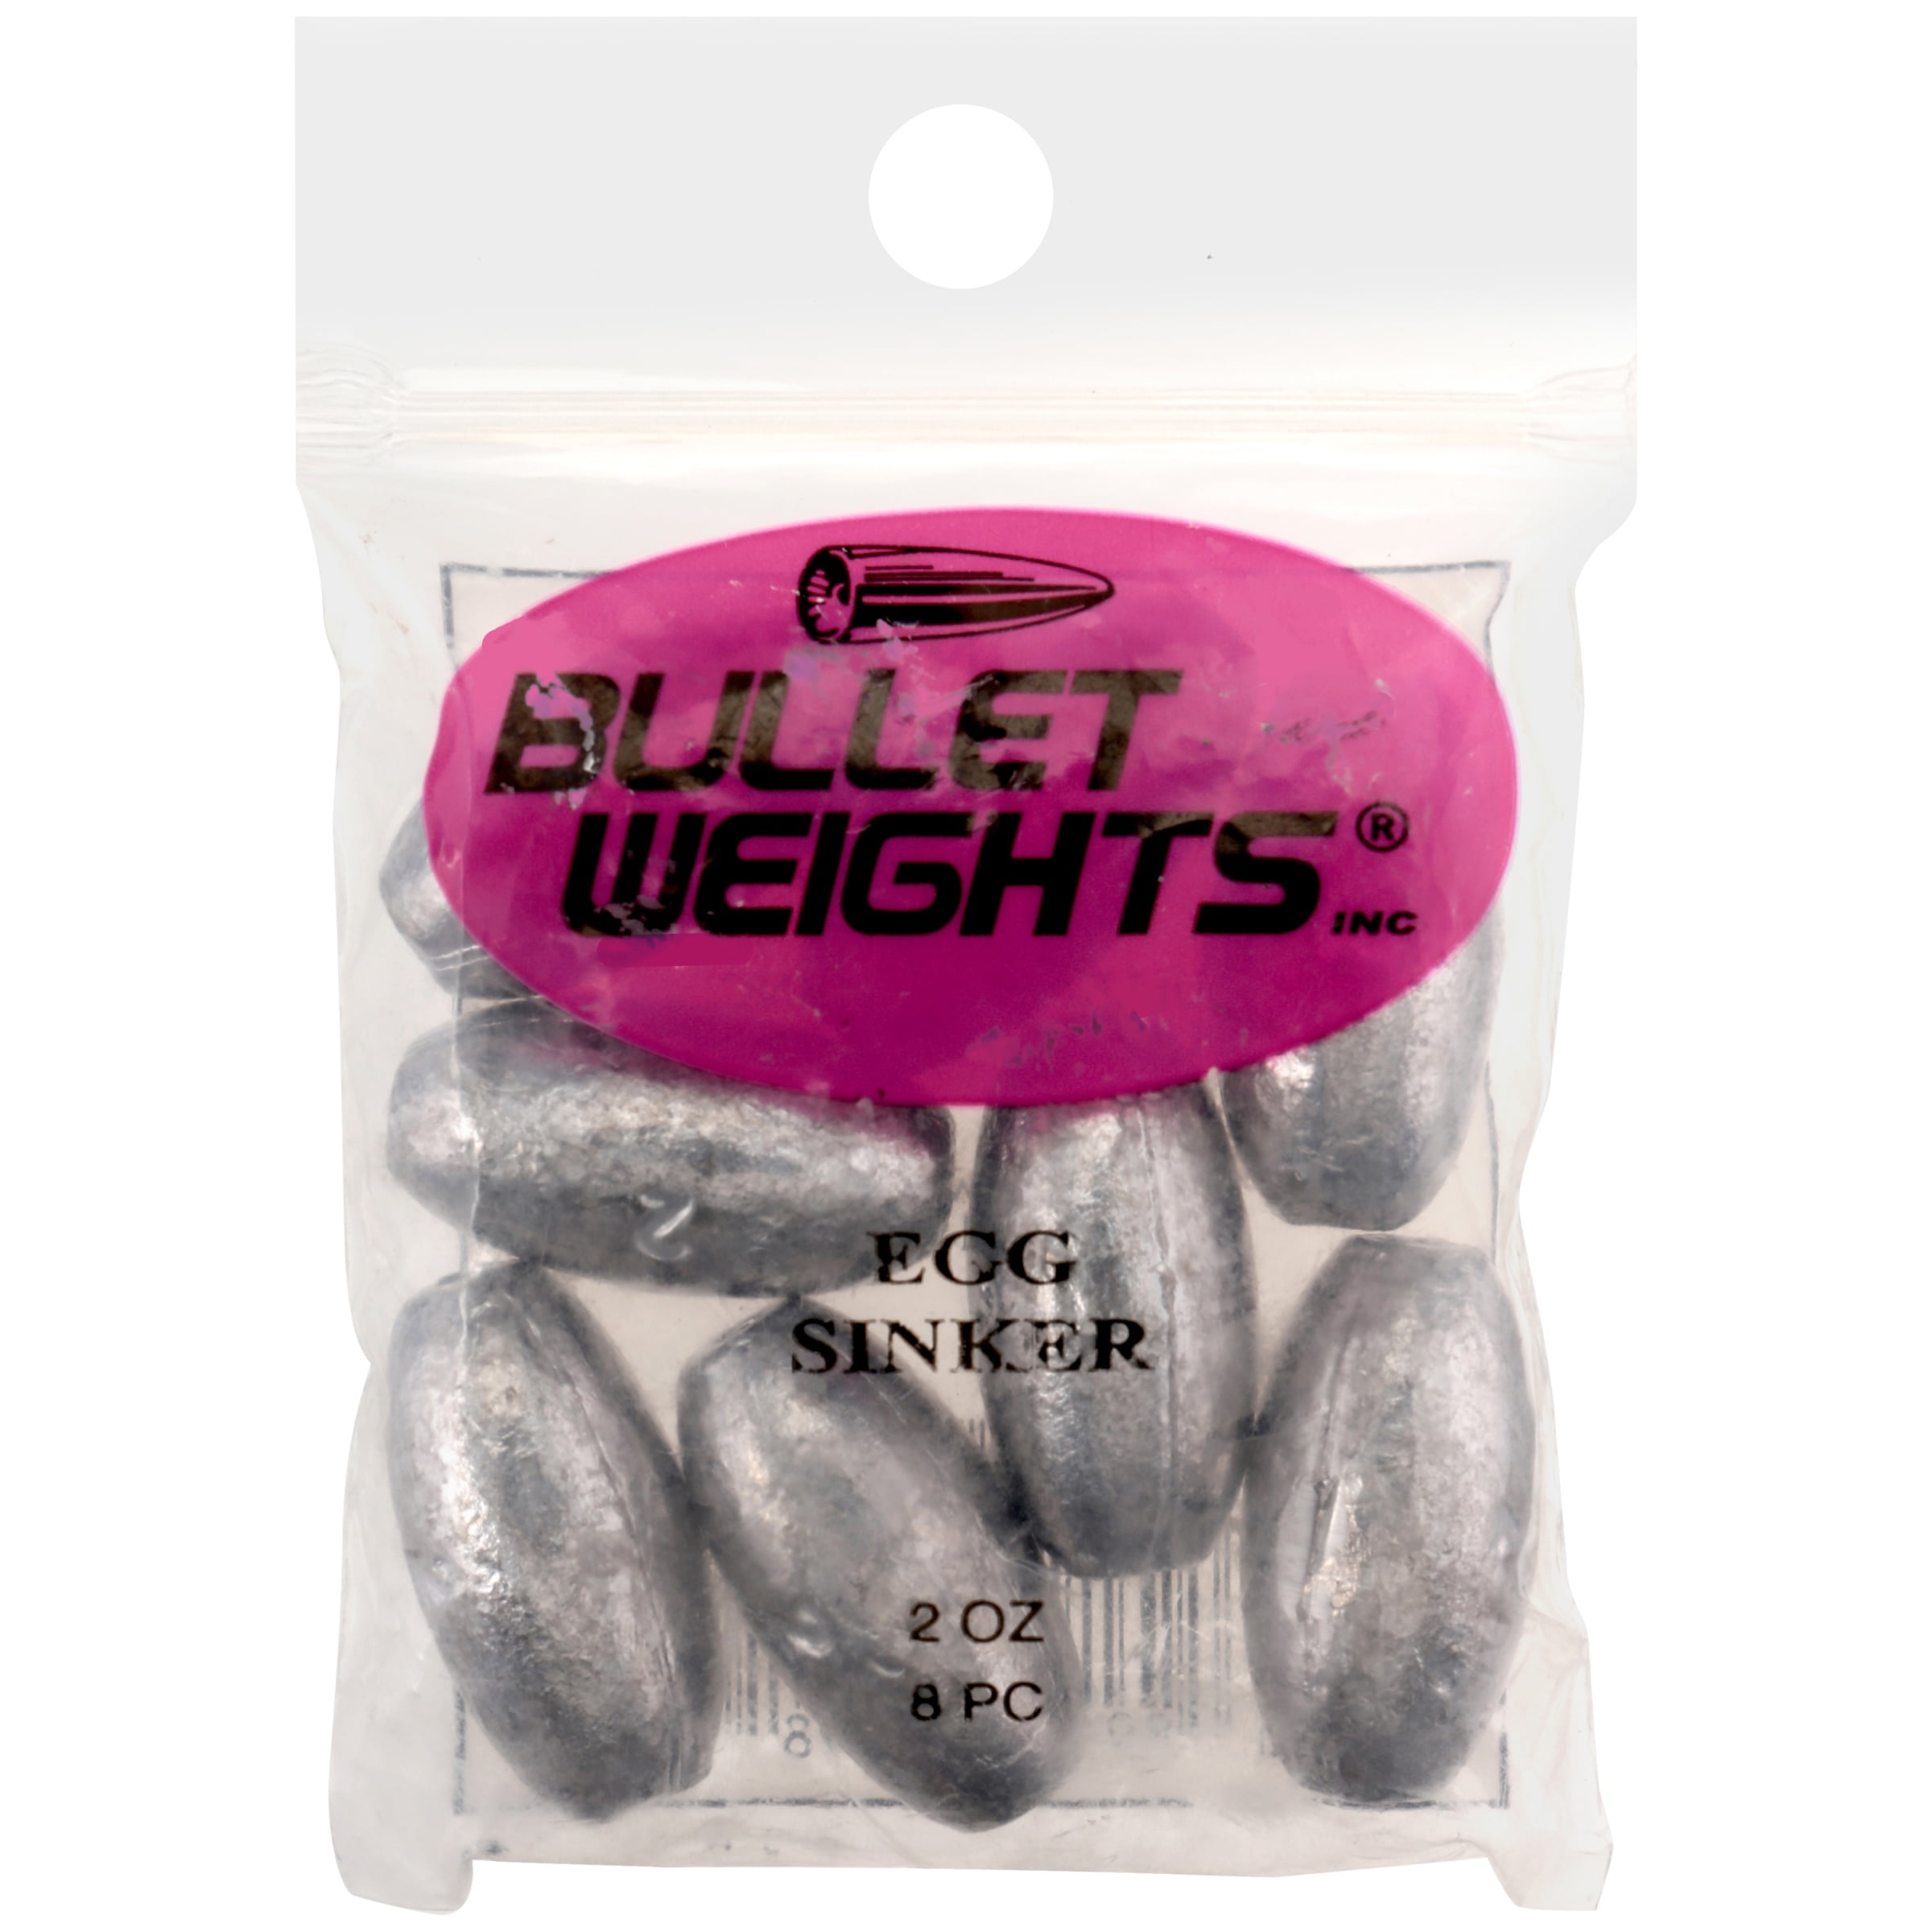 Bullet Weights EG6 Egg Sinker 3/4 Oz 5-Pack 